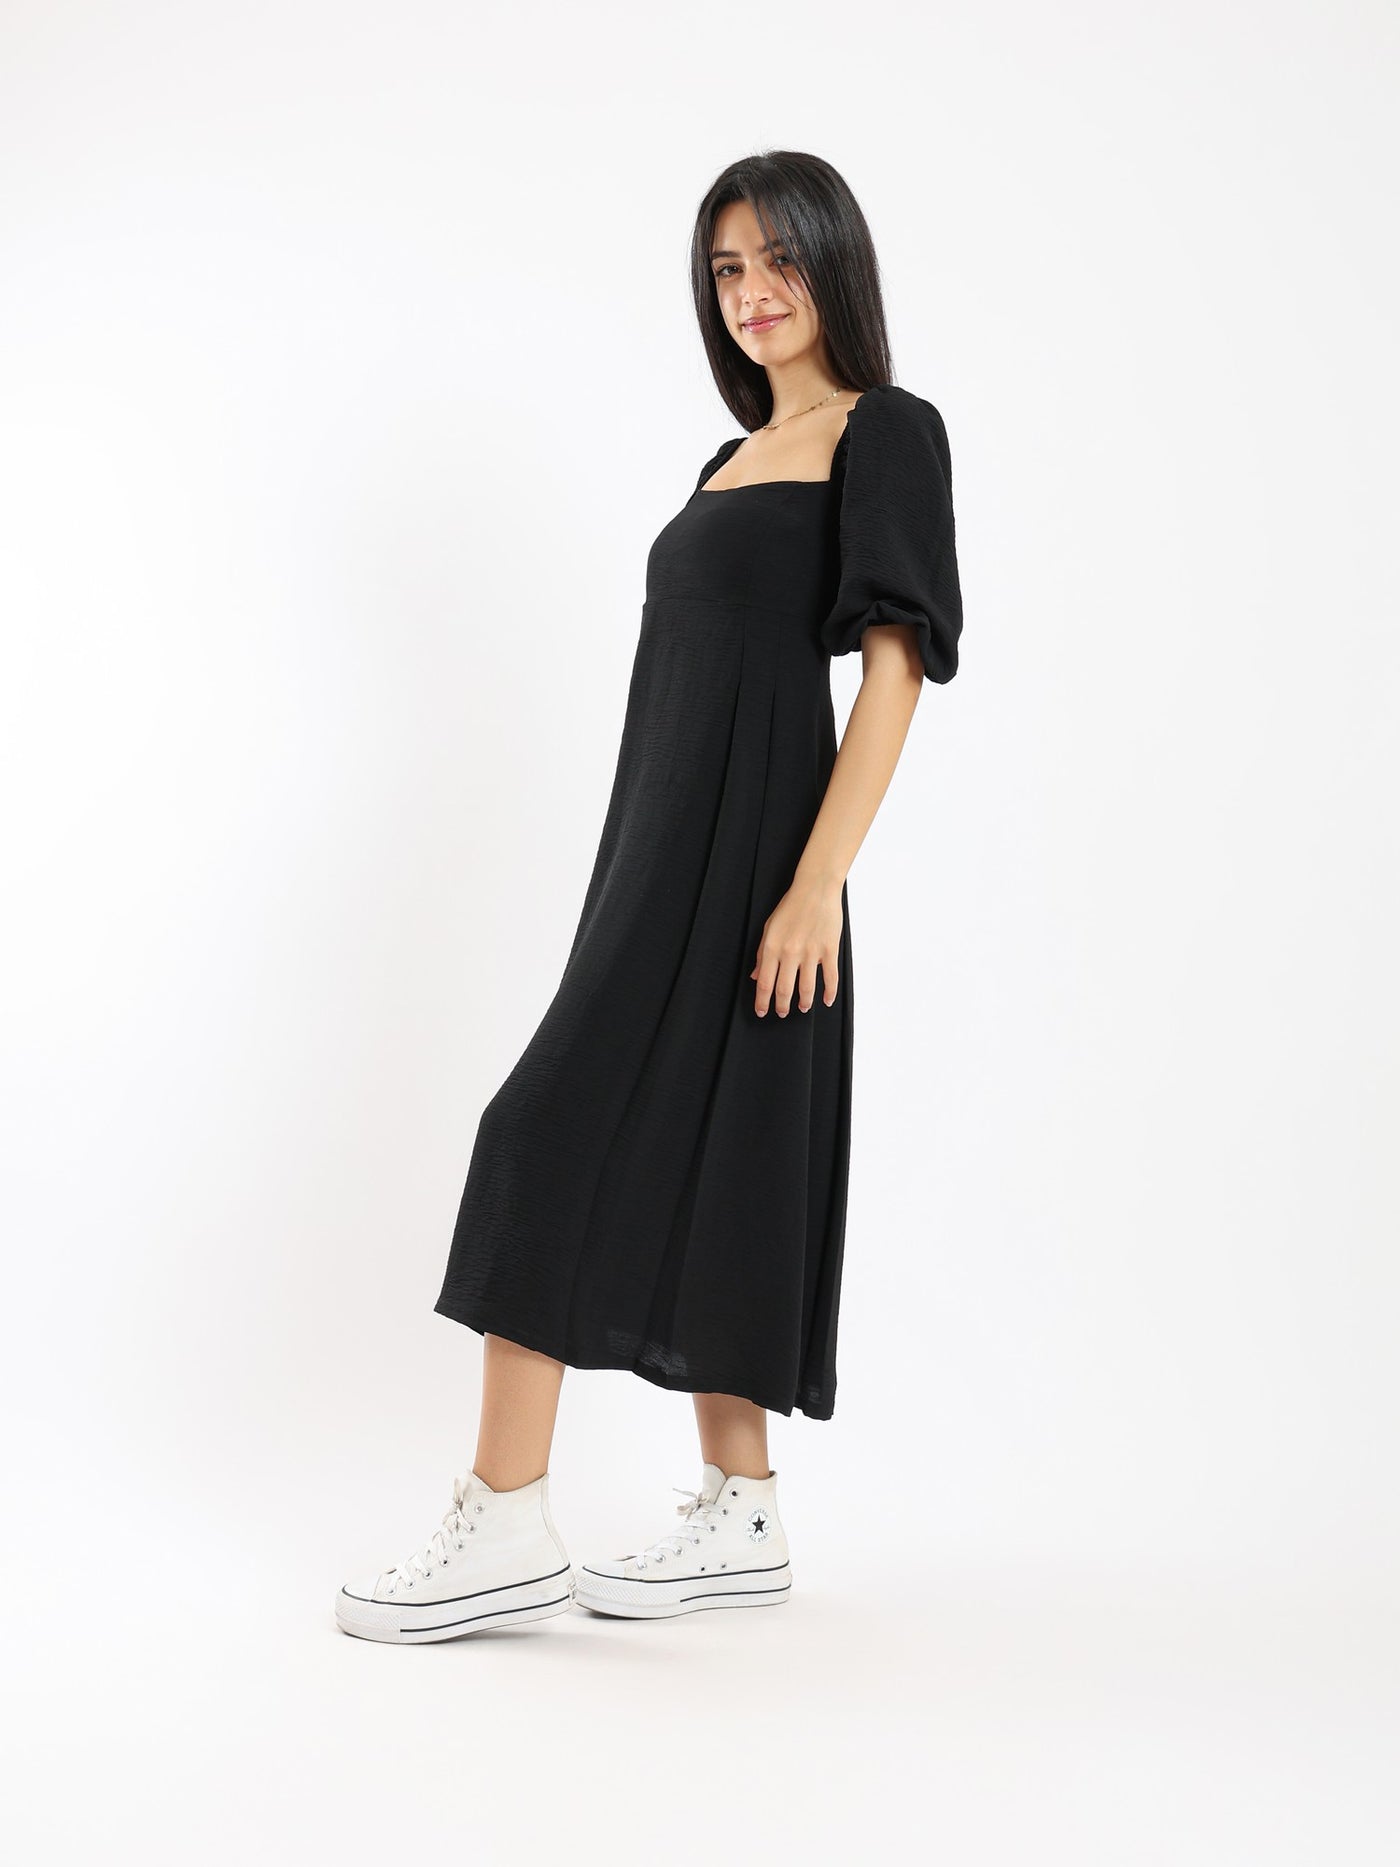 Dress - Maxi Length - Bell Sleeves